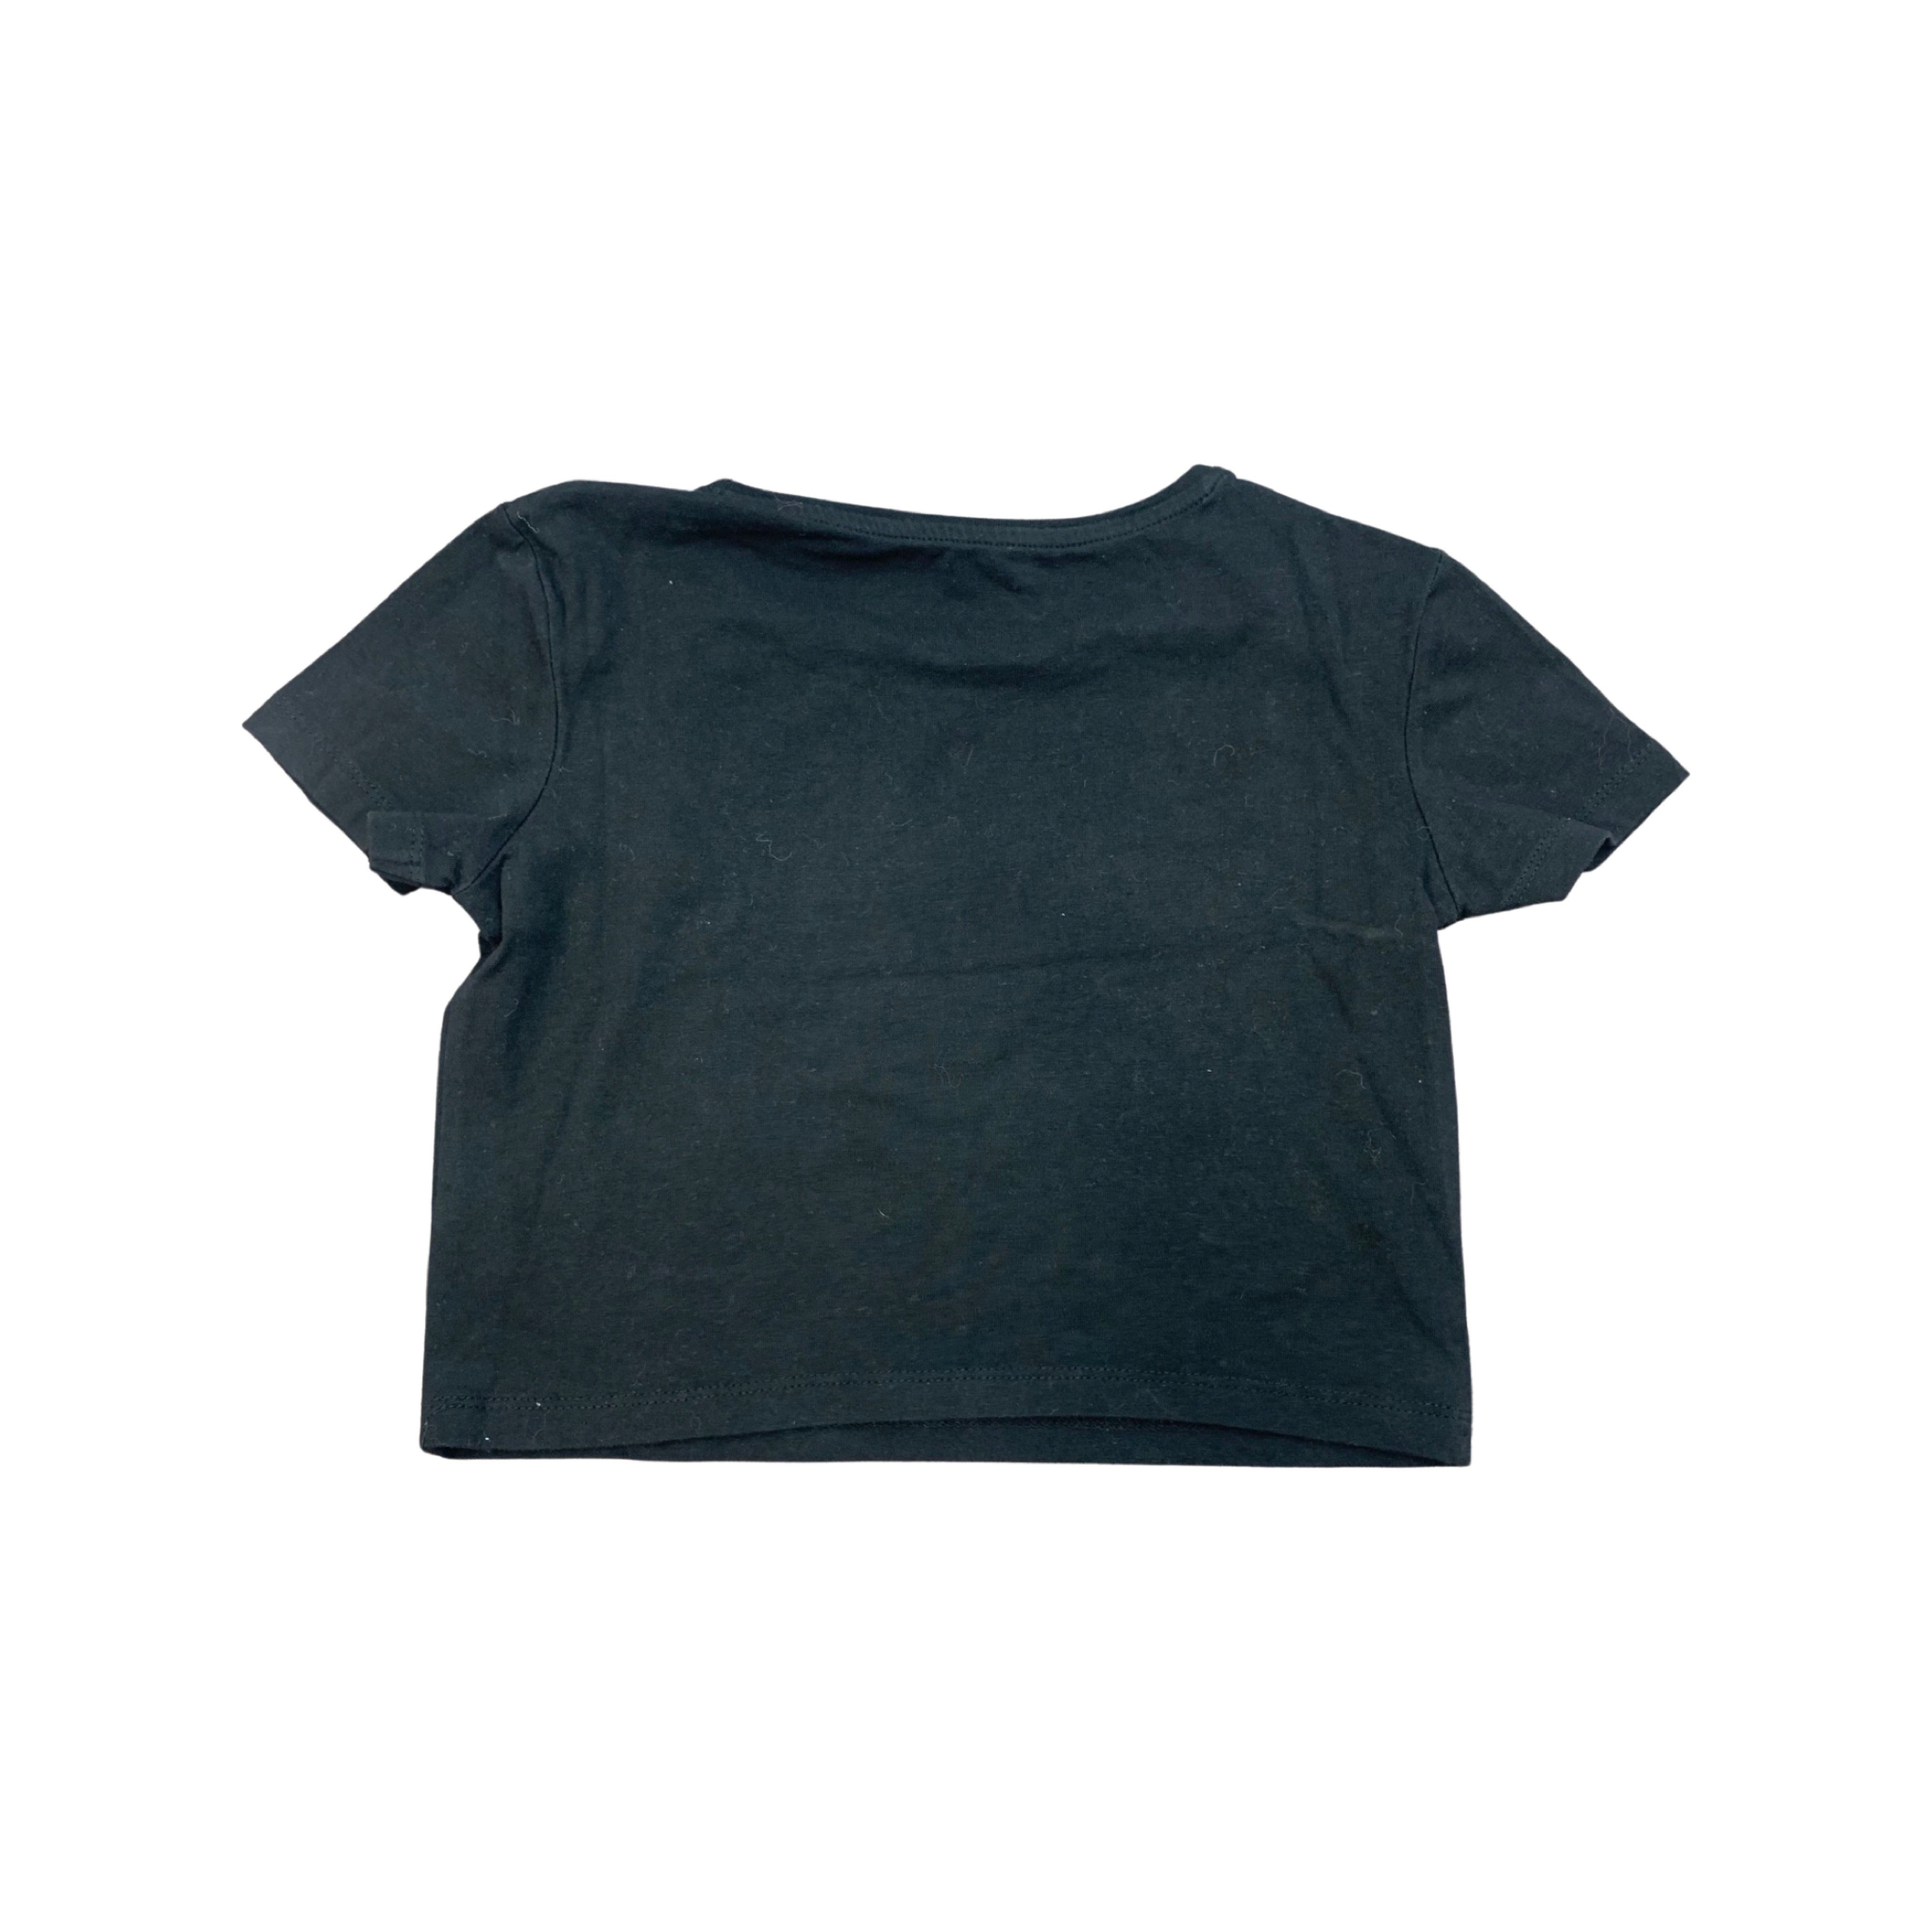 Jack Wills Cropped Long Sleeve T Shirt Girls 12-13 Years